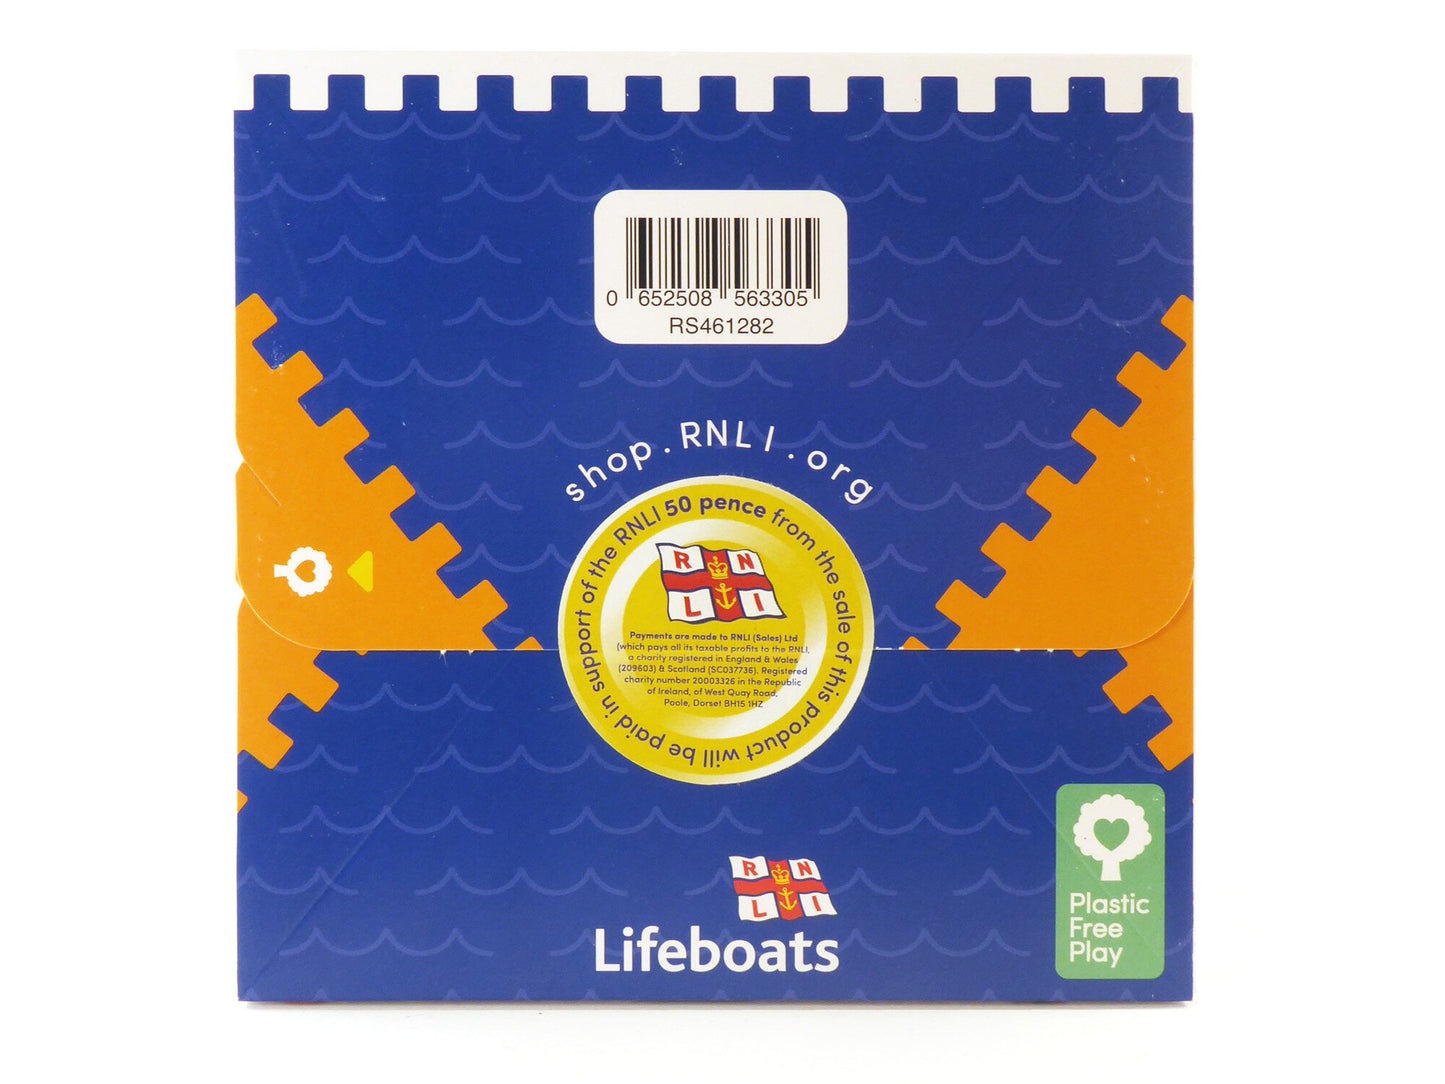 Inshore Lifeboat - Build & Play Set - Loola Loves UK